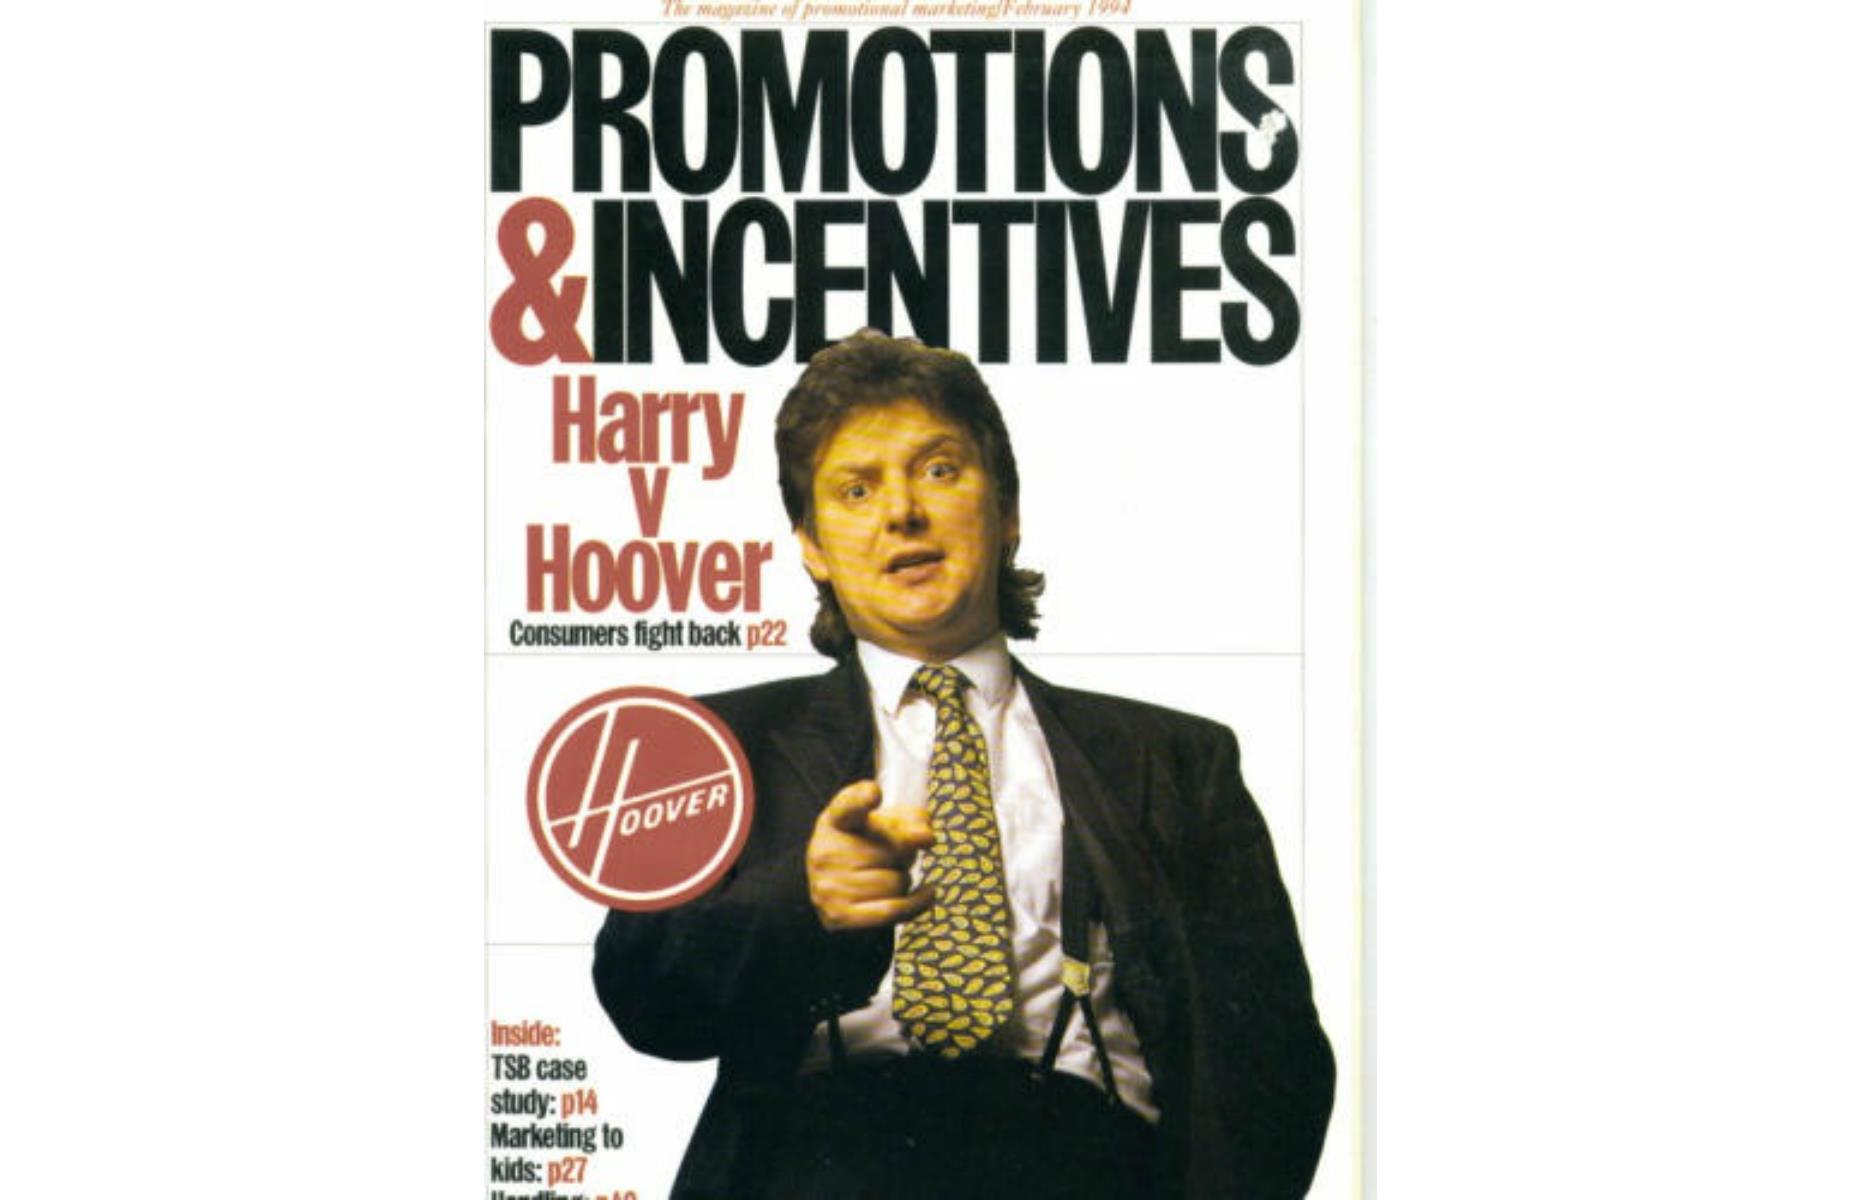 Harry Cichy v Hoover (1992)